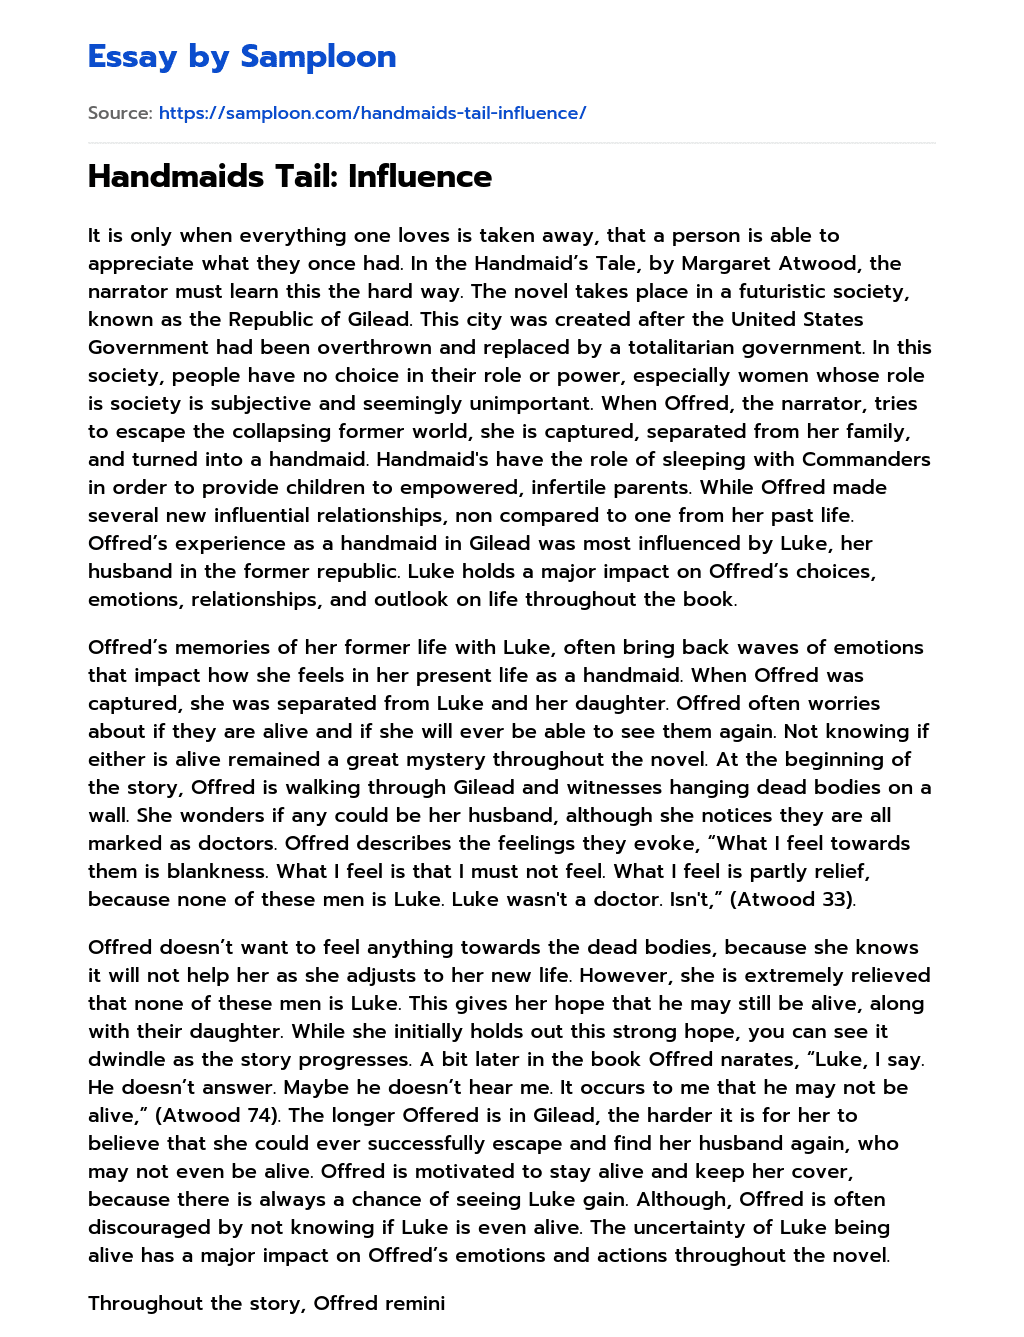 Handmaids Tail: Influence essay